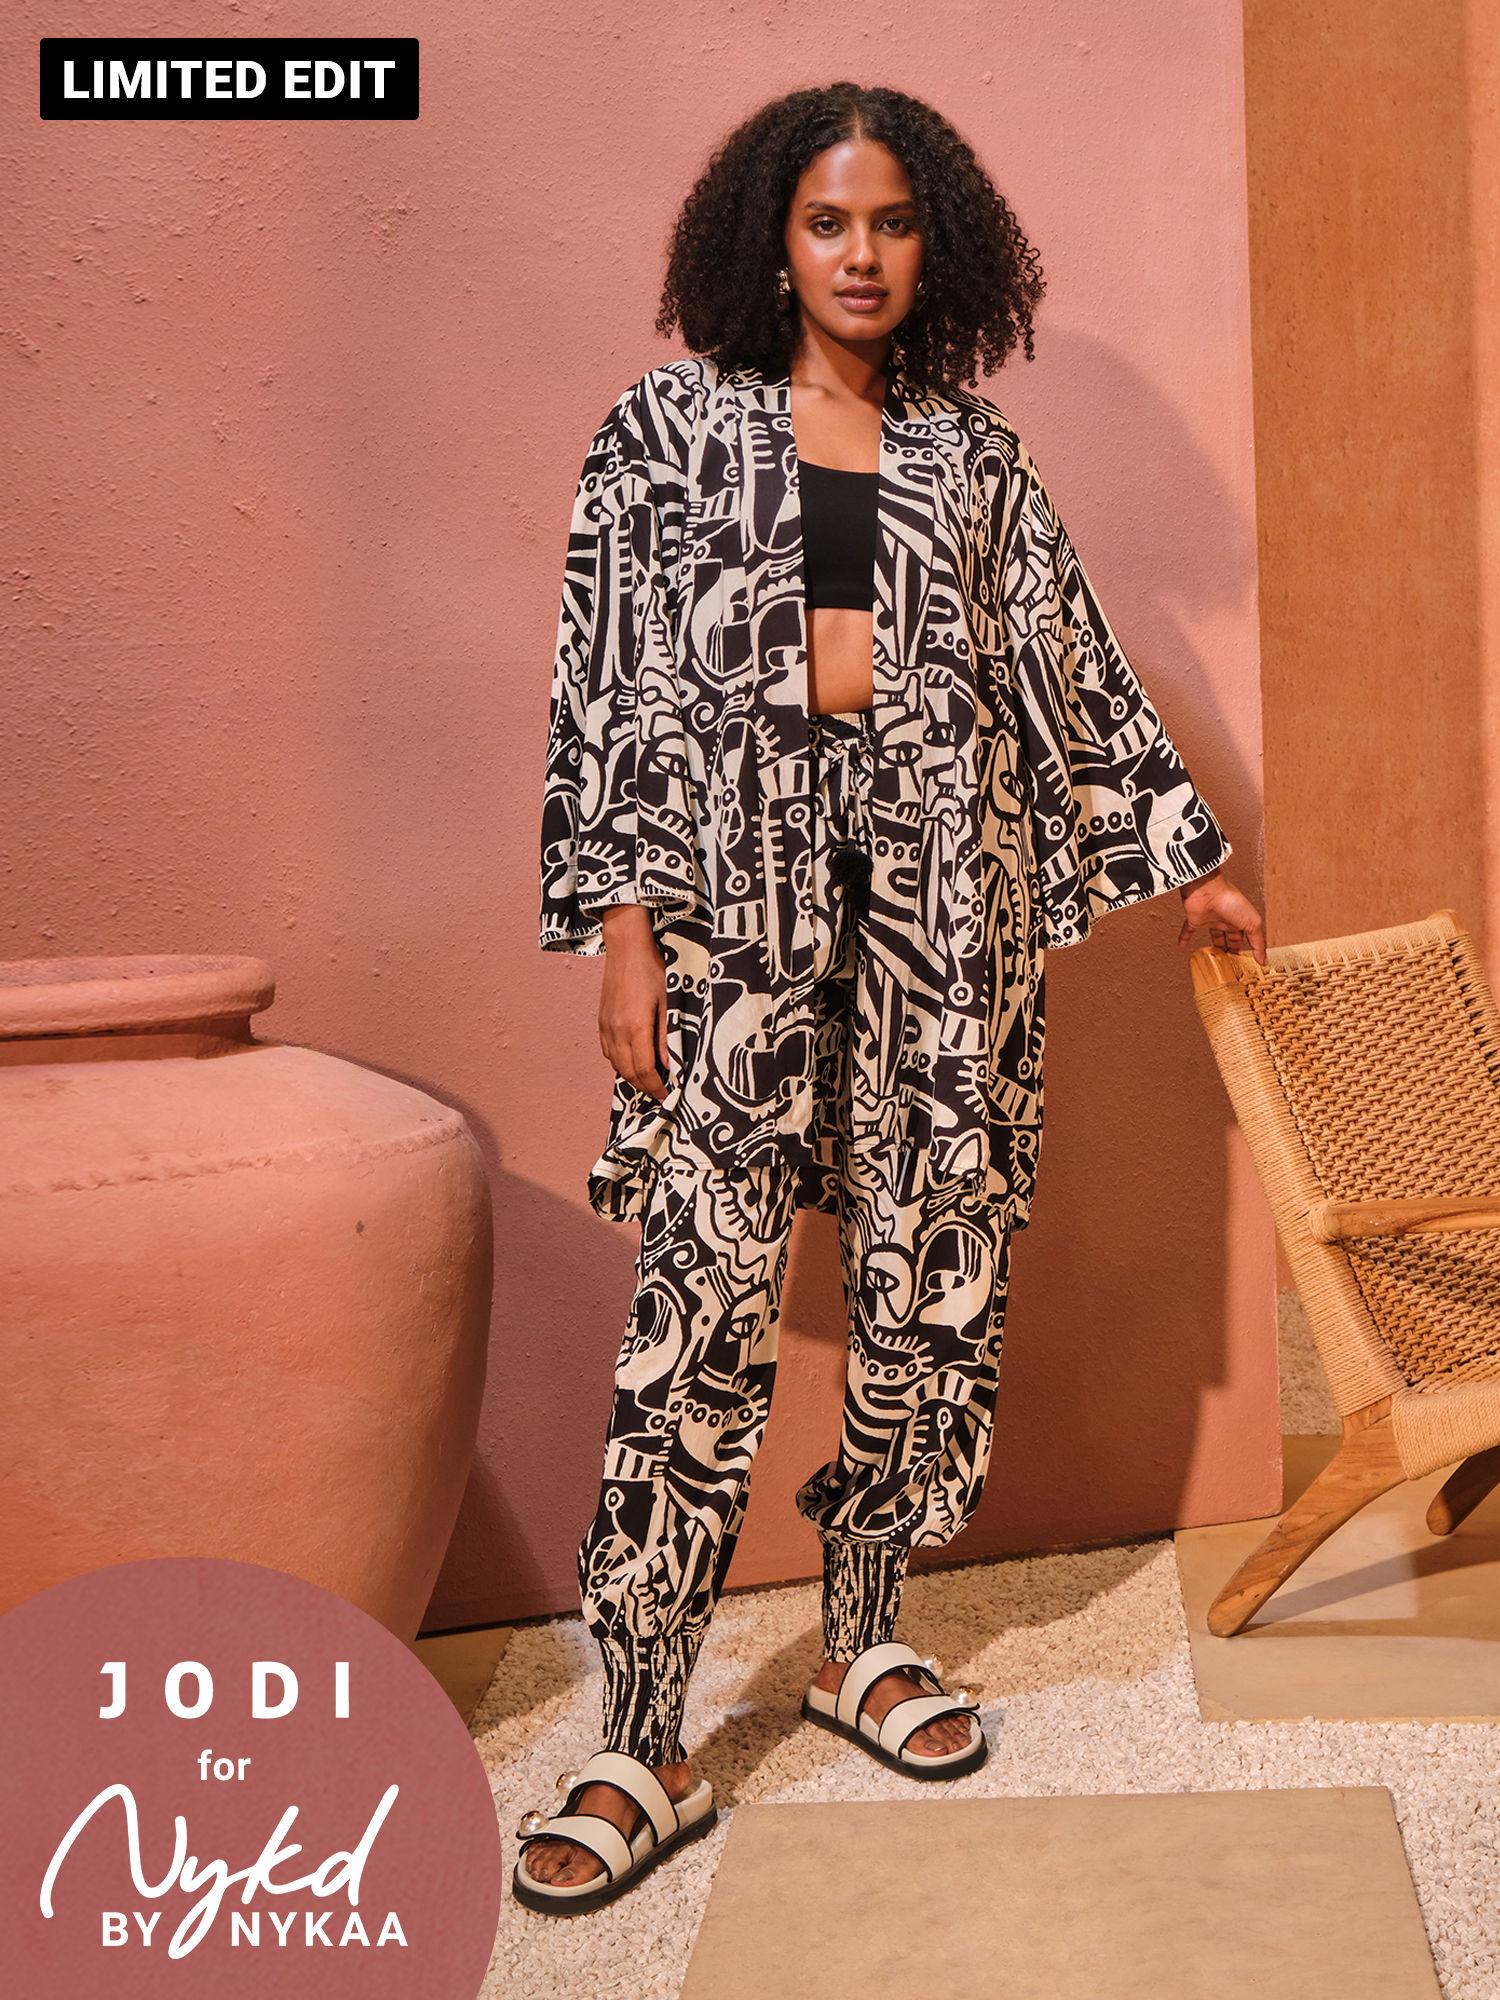 jodi x nykd modal shrug jacket with embroidered sleeves -nyj10-black & white intertwined print